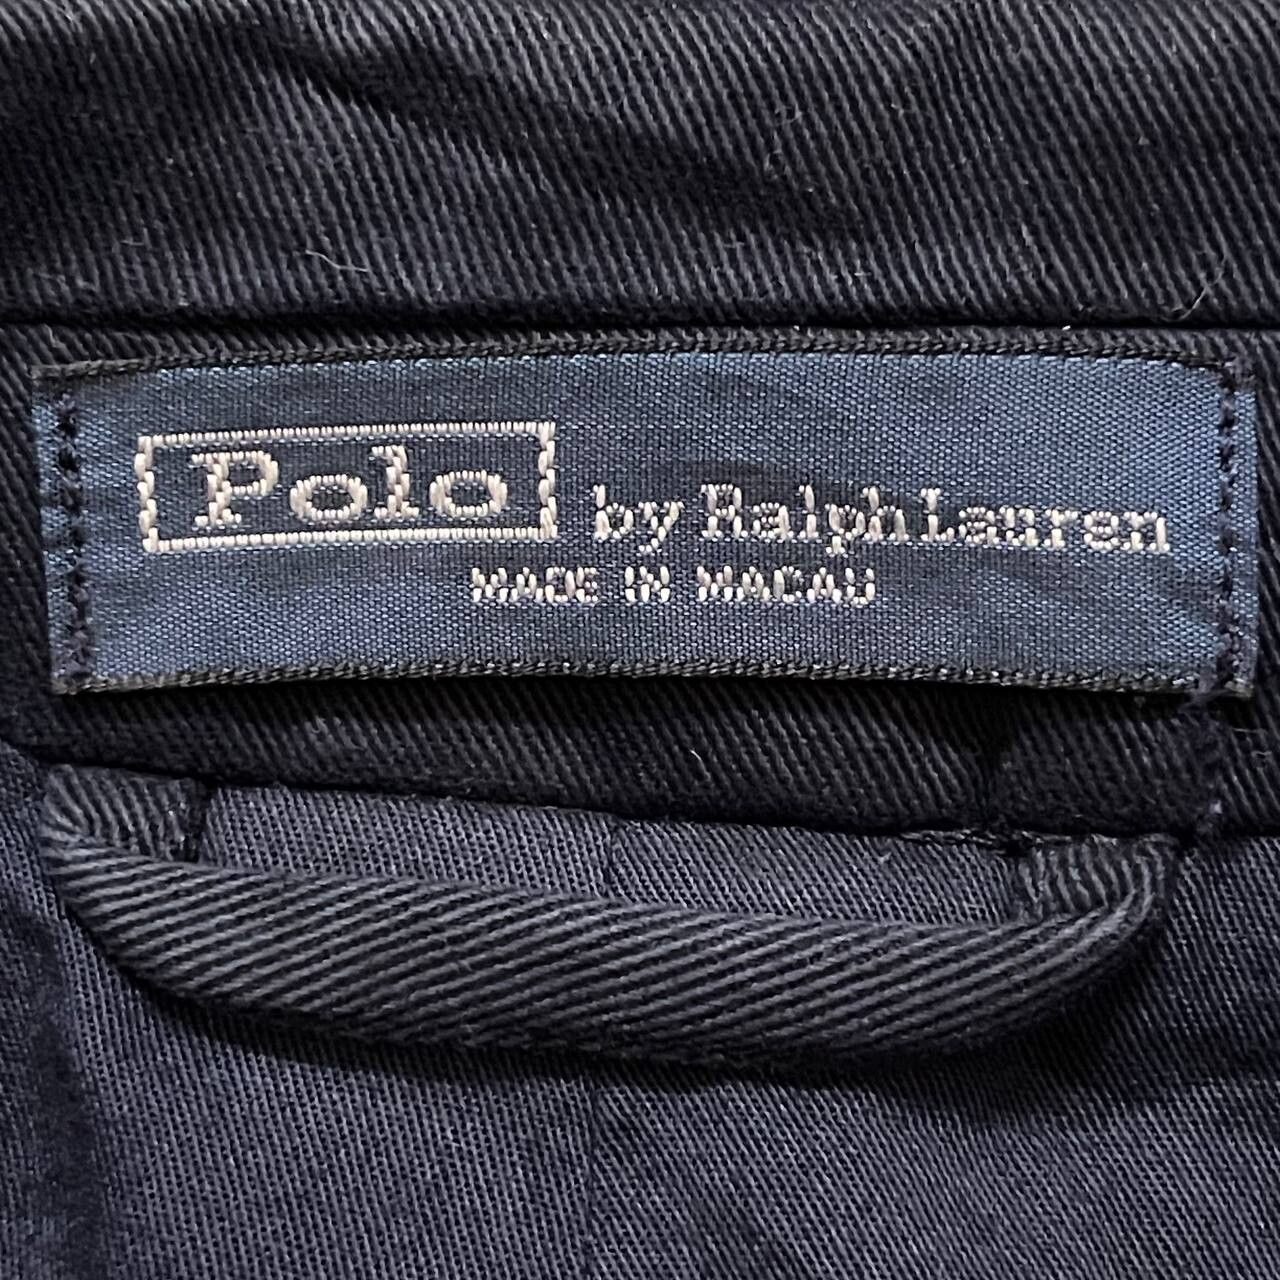 Vintage Polo Ralph Lauren Blazer Jacket - 9